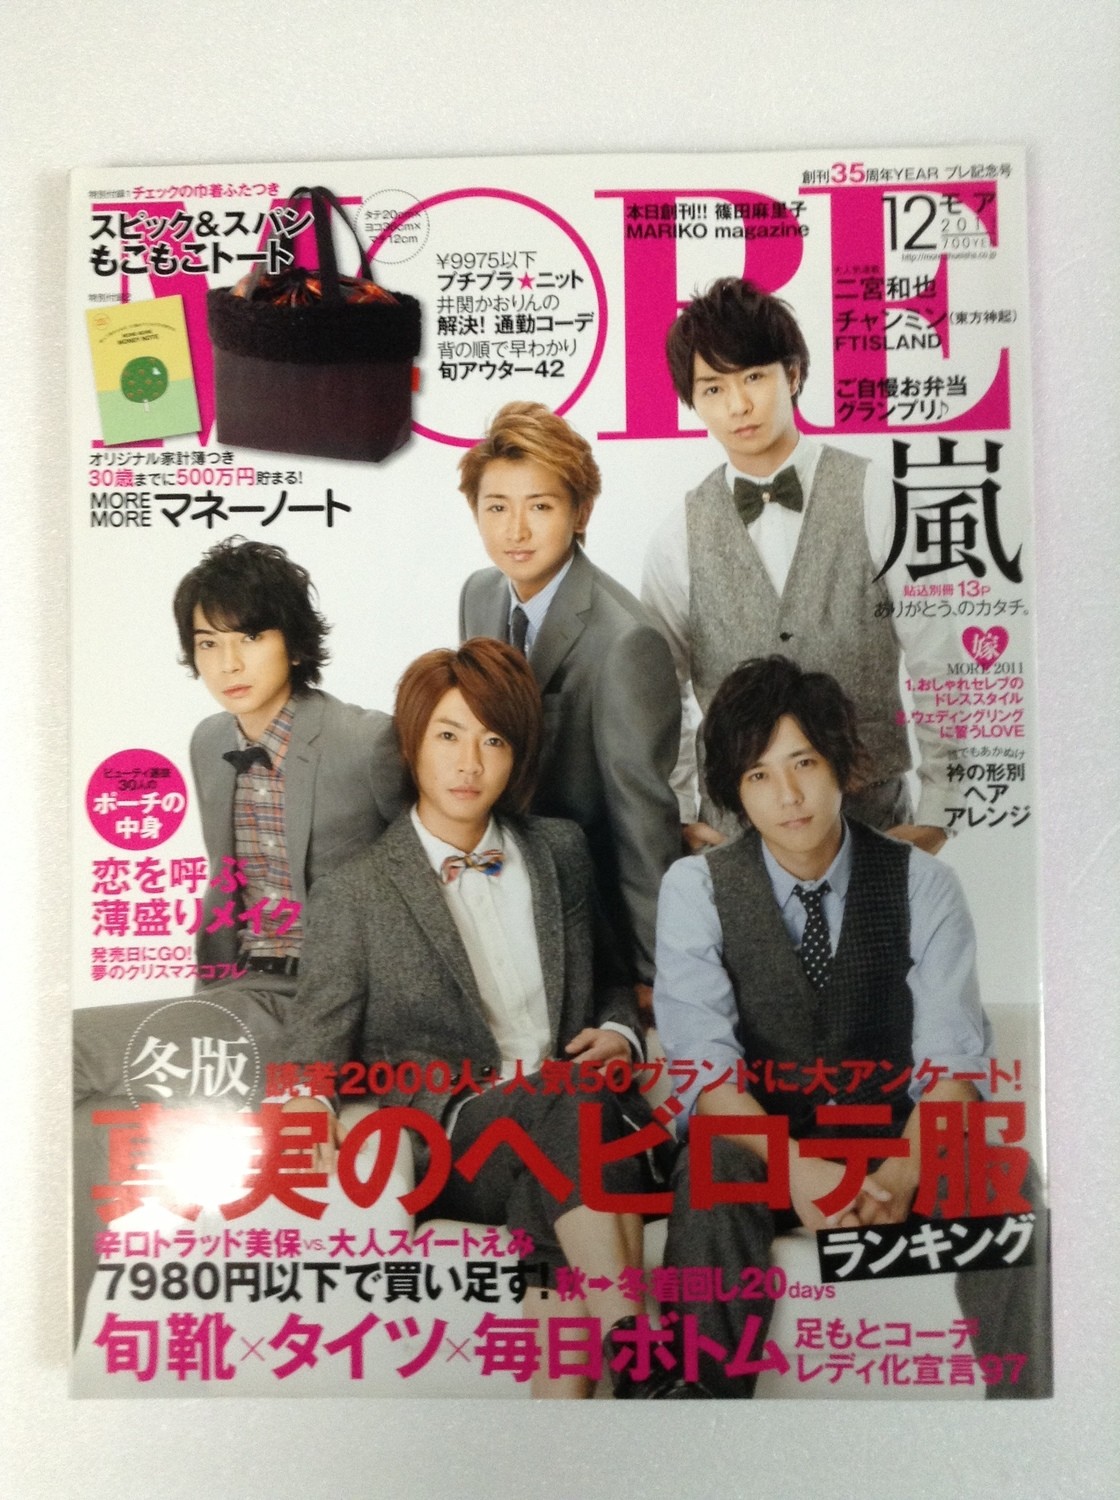 More December 2011 Magazine featuring Arashi